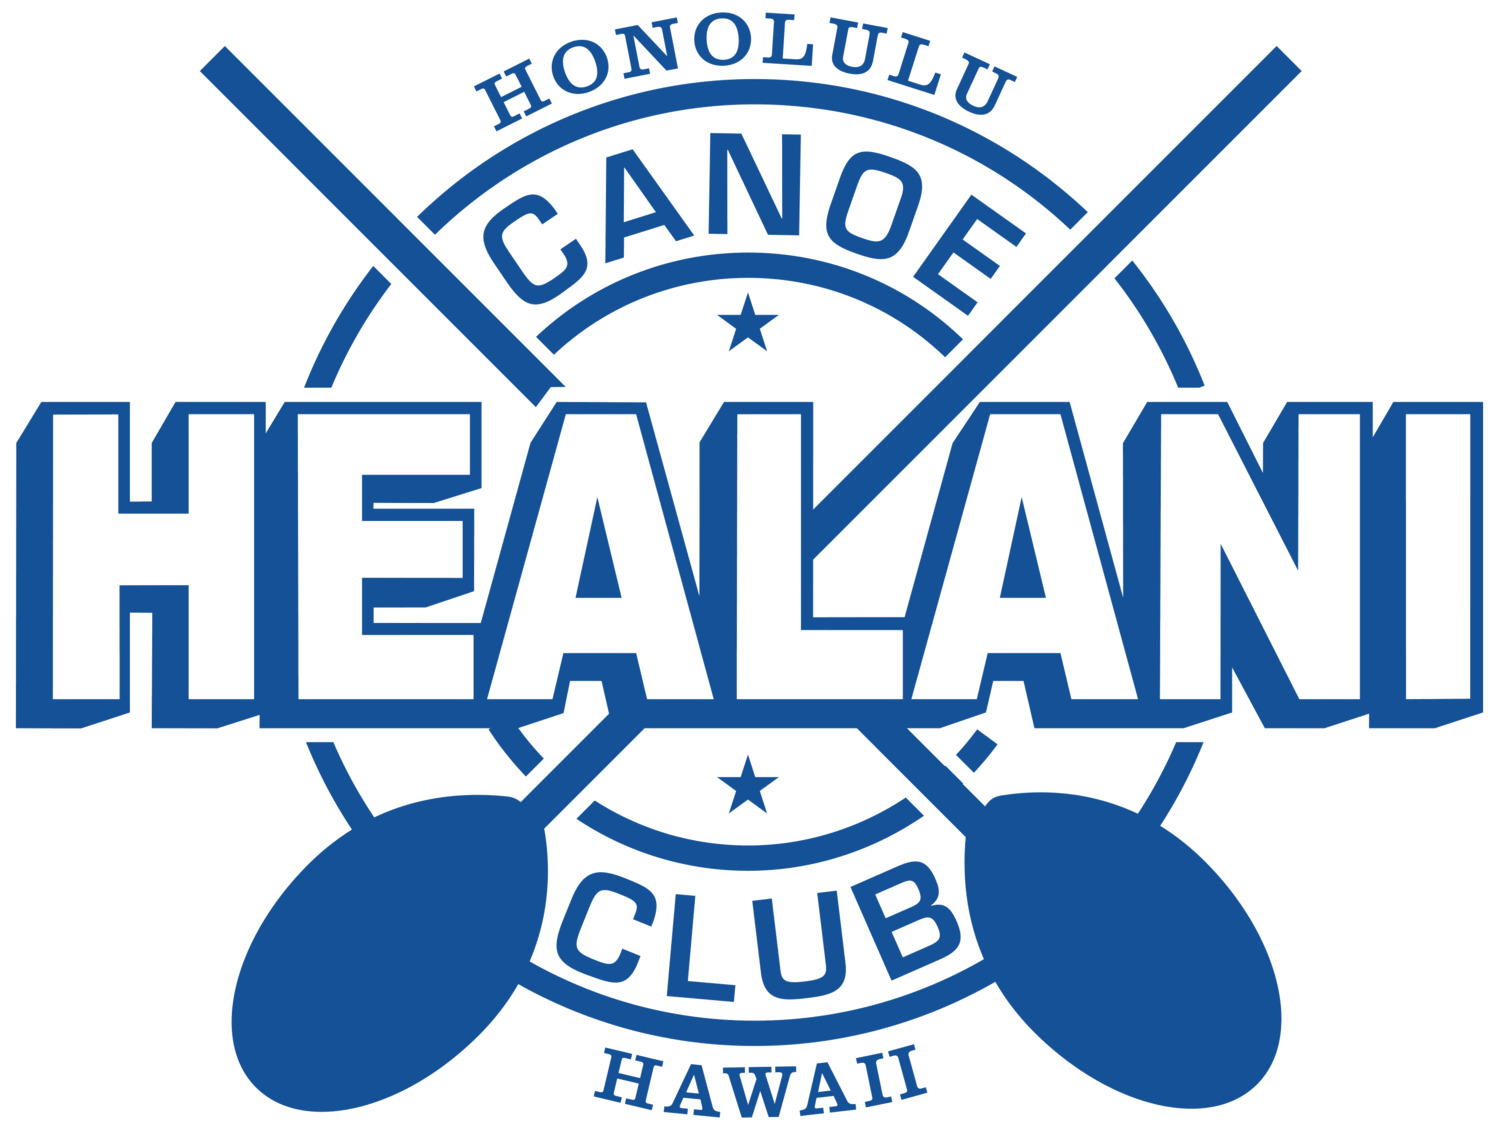 Honolulu Canoe Healani Club Hawaii icons